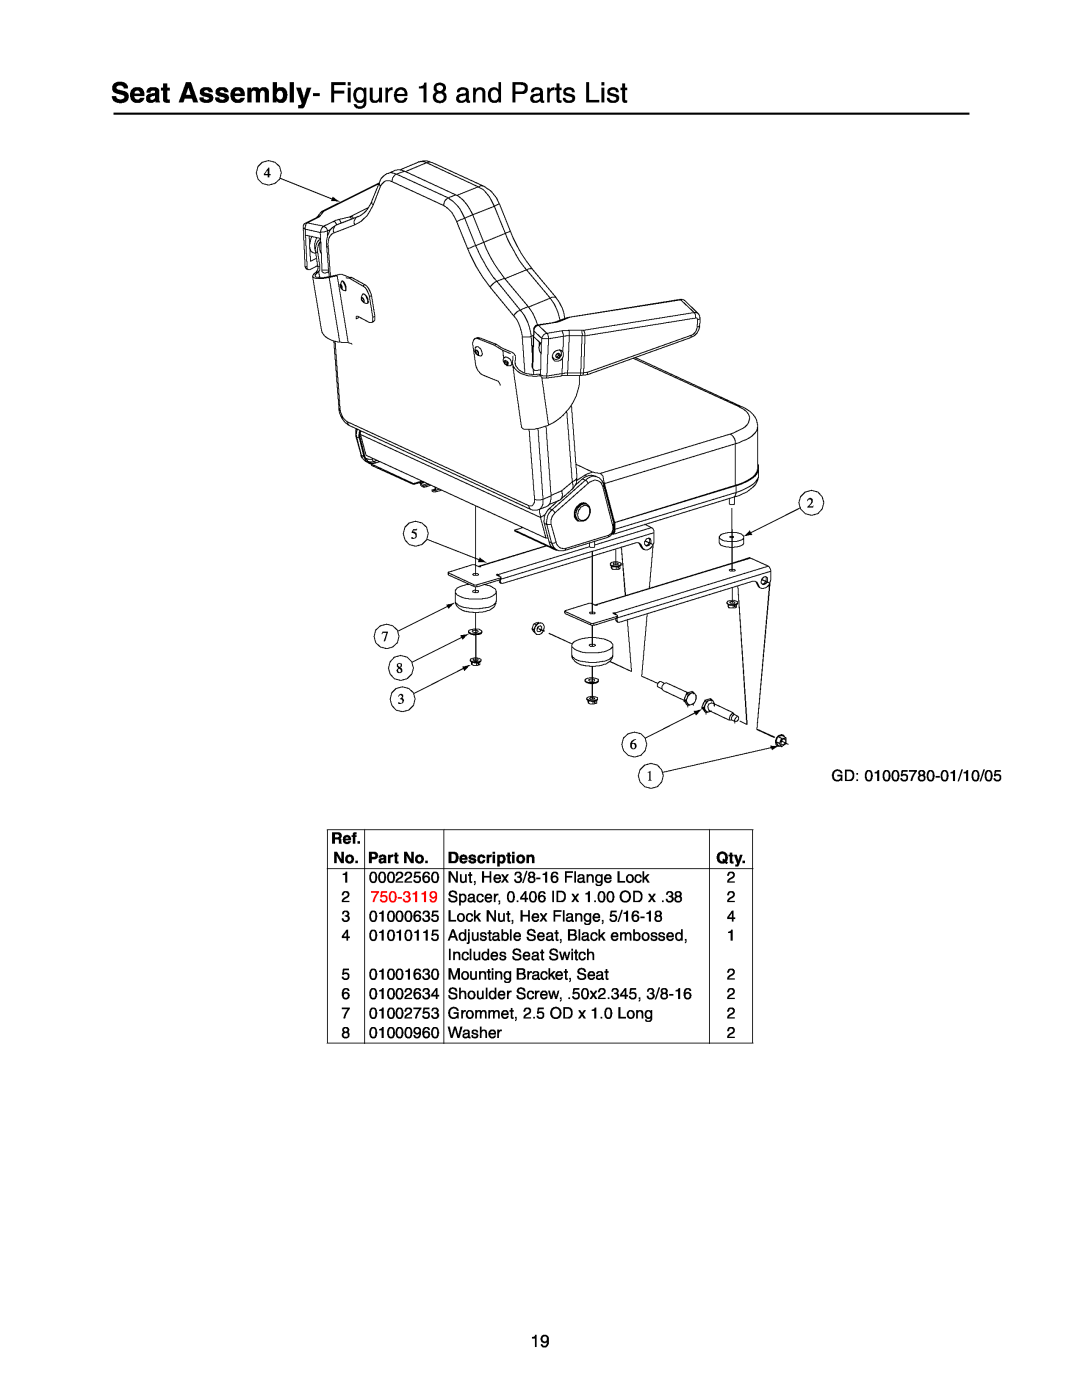 Cub Cadet Lawn Mower manual Seat Assembly- and Parts List, No. Part No, Description, 750-3119 